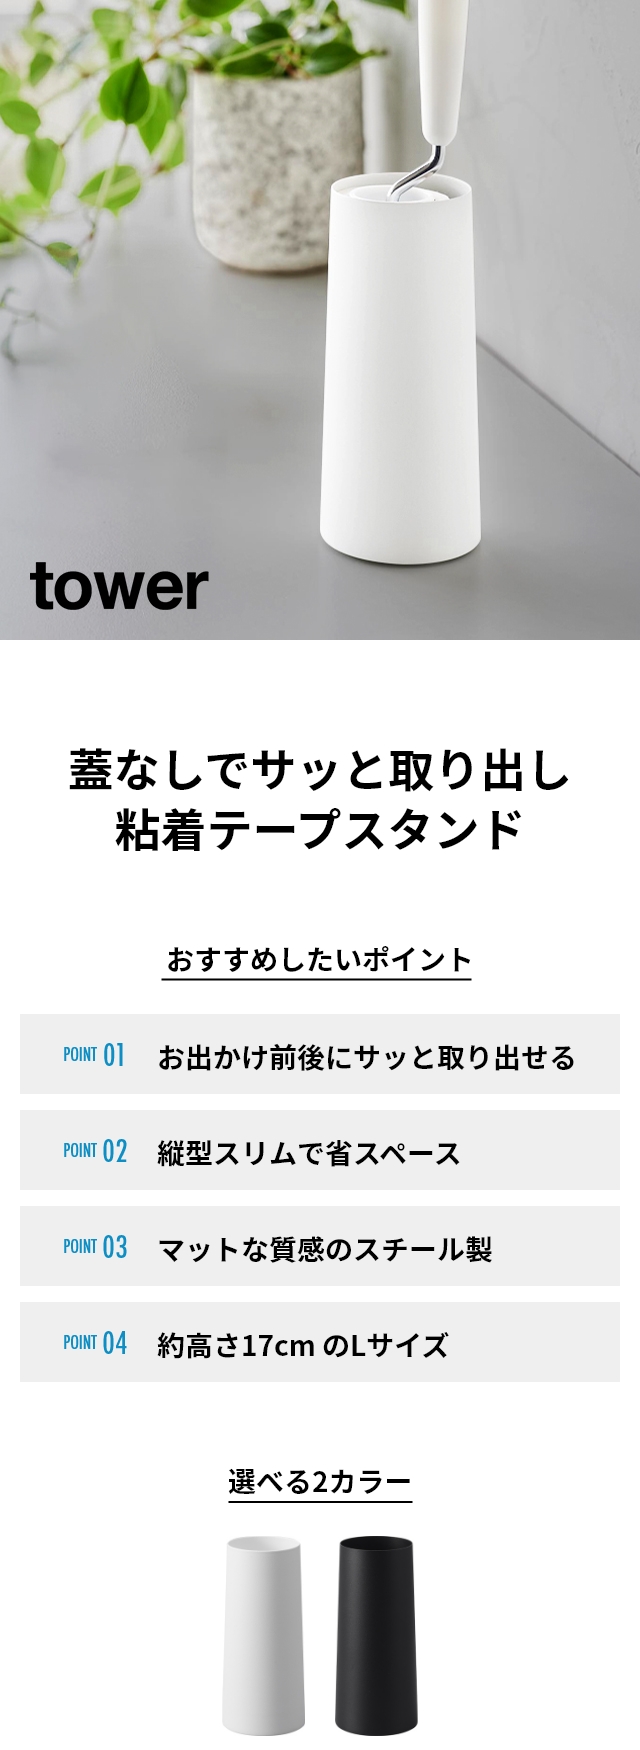 tower (タワー) 粘着クリーナースタンド L 縦型